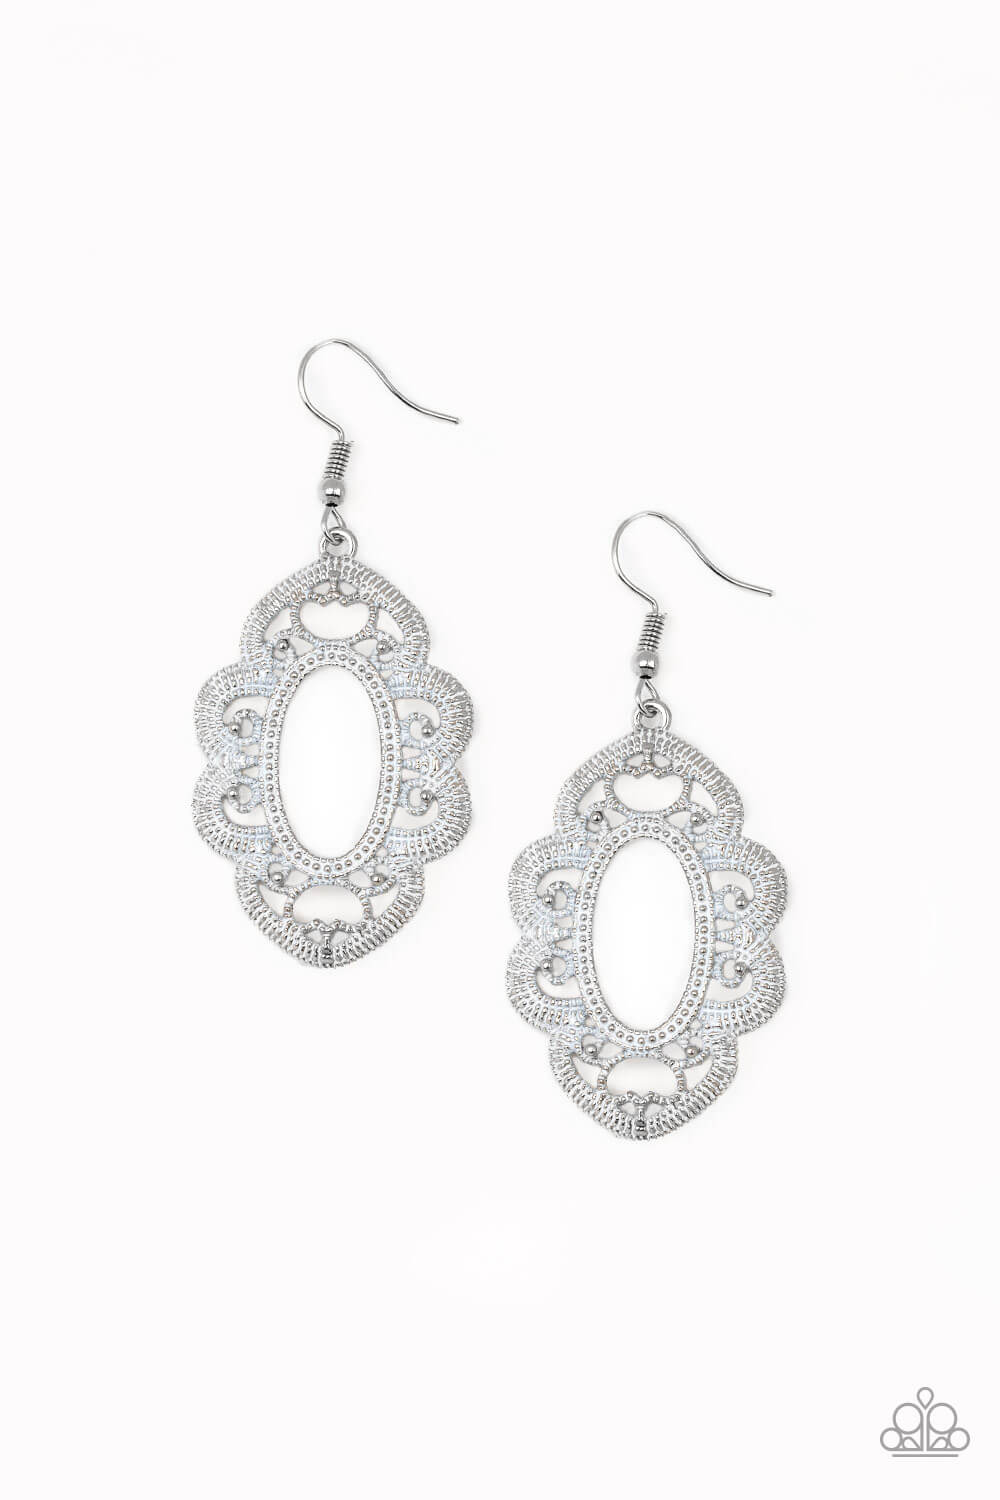 Mantras and Mandalas - White Earrings - Princess Glam Shop